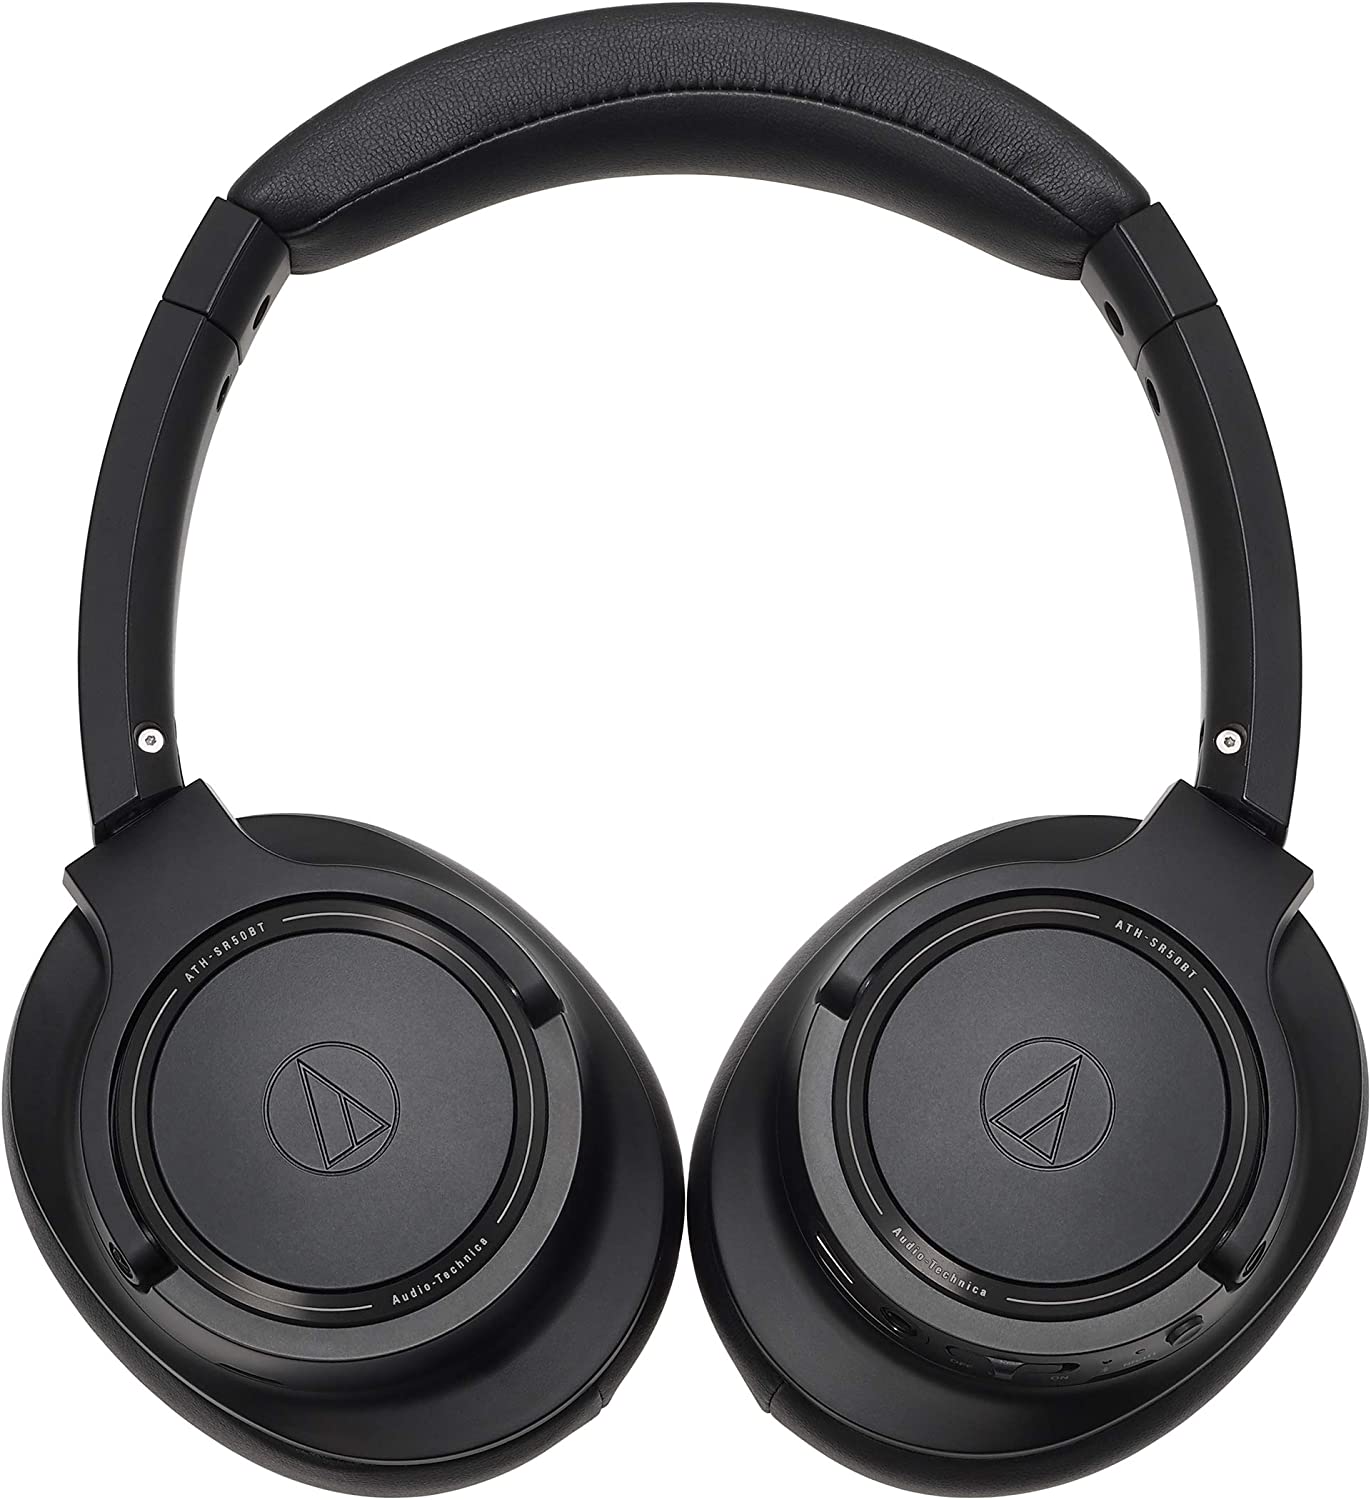 Audio-Technica ATH-SR50BTBK-RB Bluetooth Wireless Over-Ear Headphones Black - Certified Refurbished